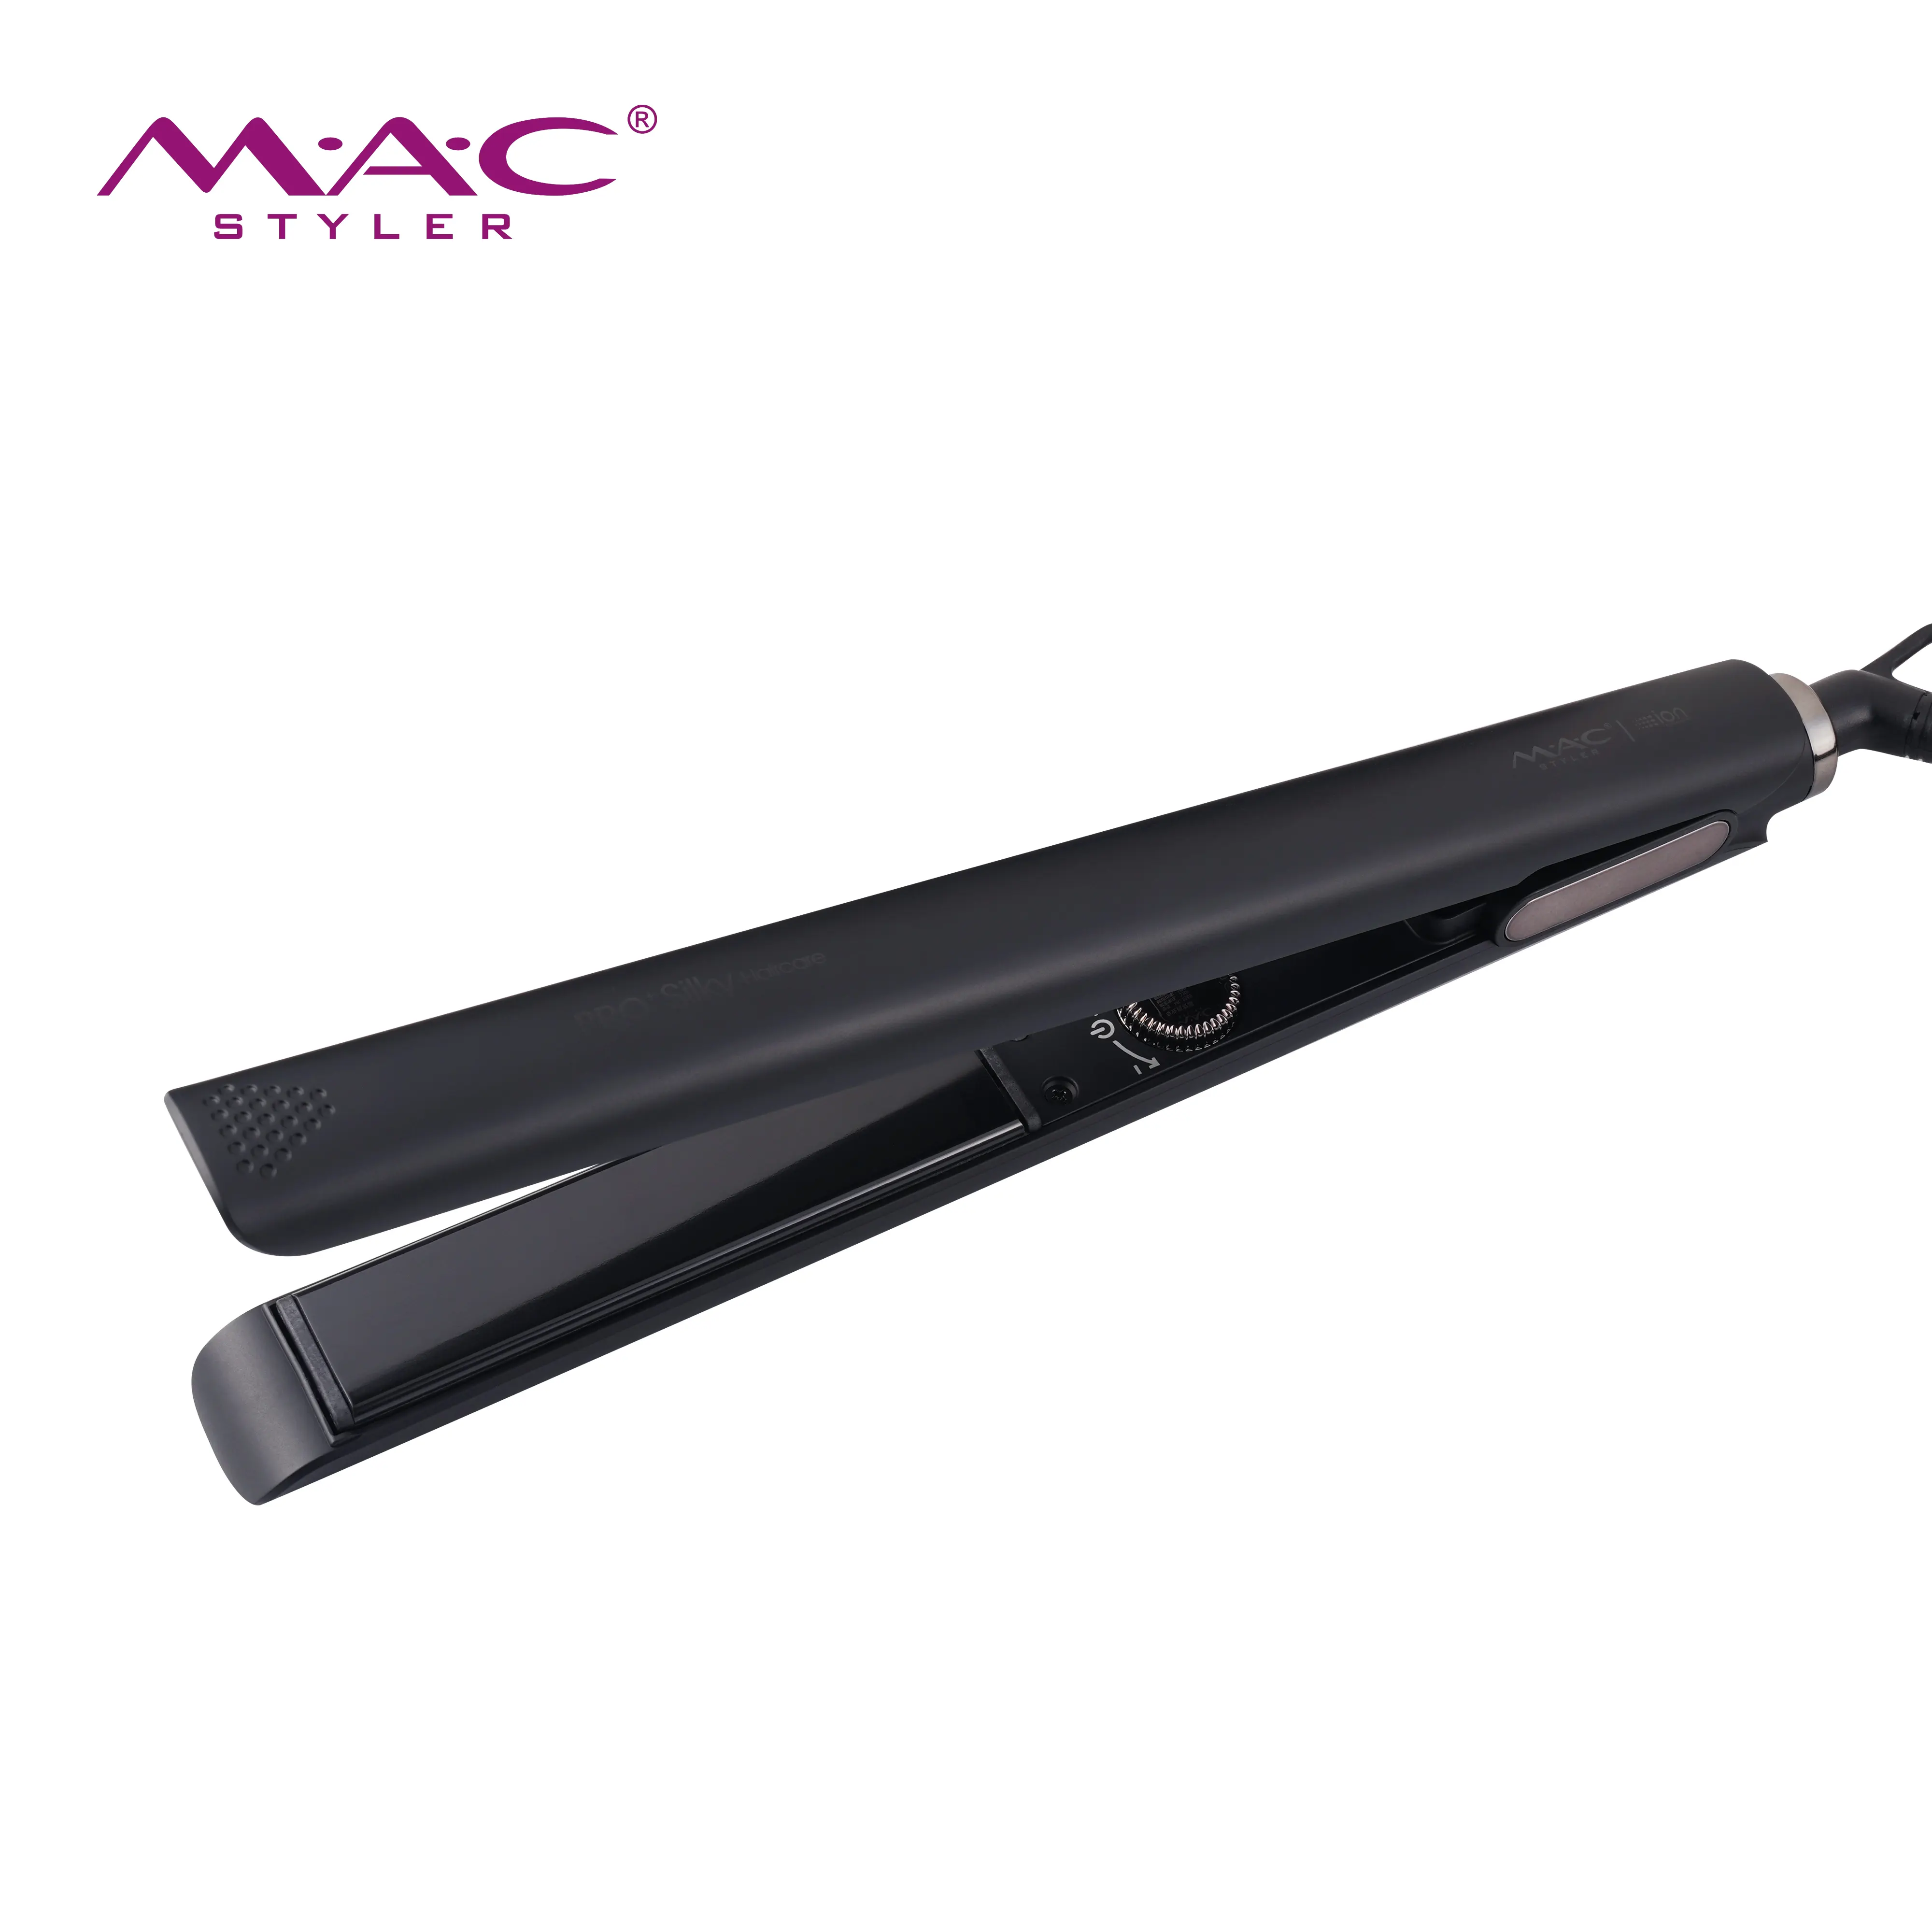 MAC Styler kustom Label pribadi warna hitam besi datar 250C pelurus rambut Styling rambut keriting